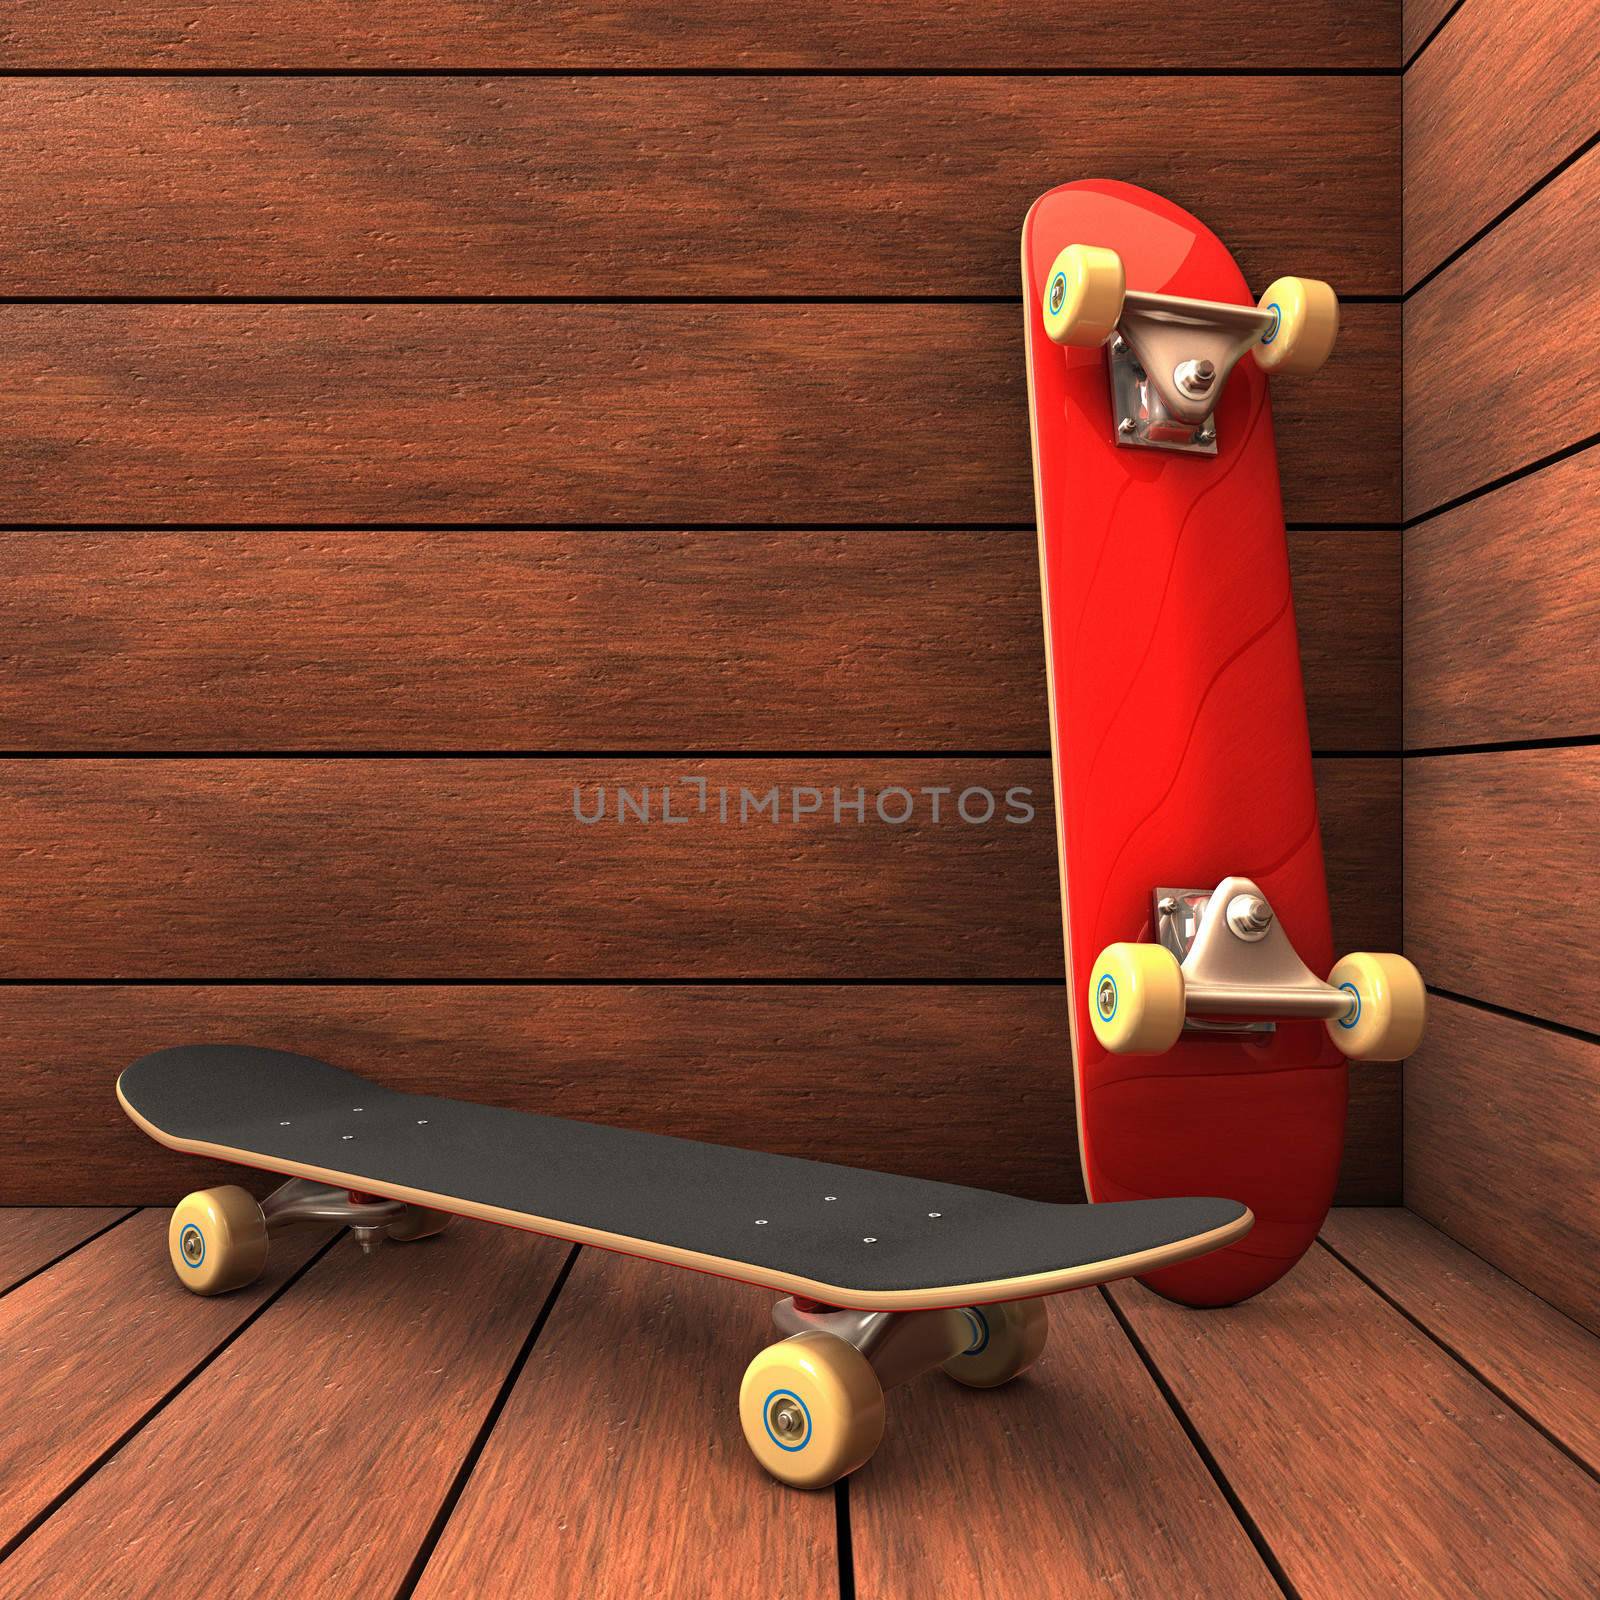 Skateboard composition on wood background